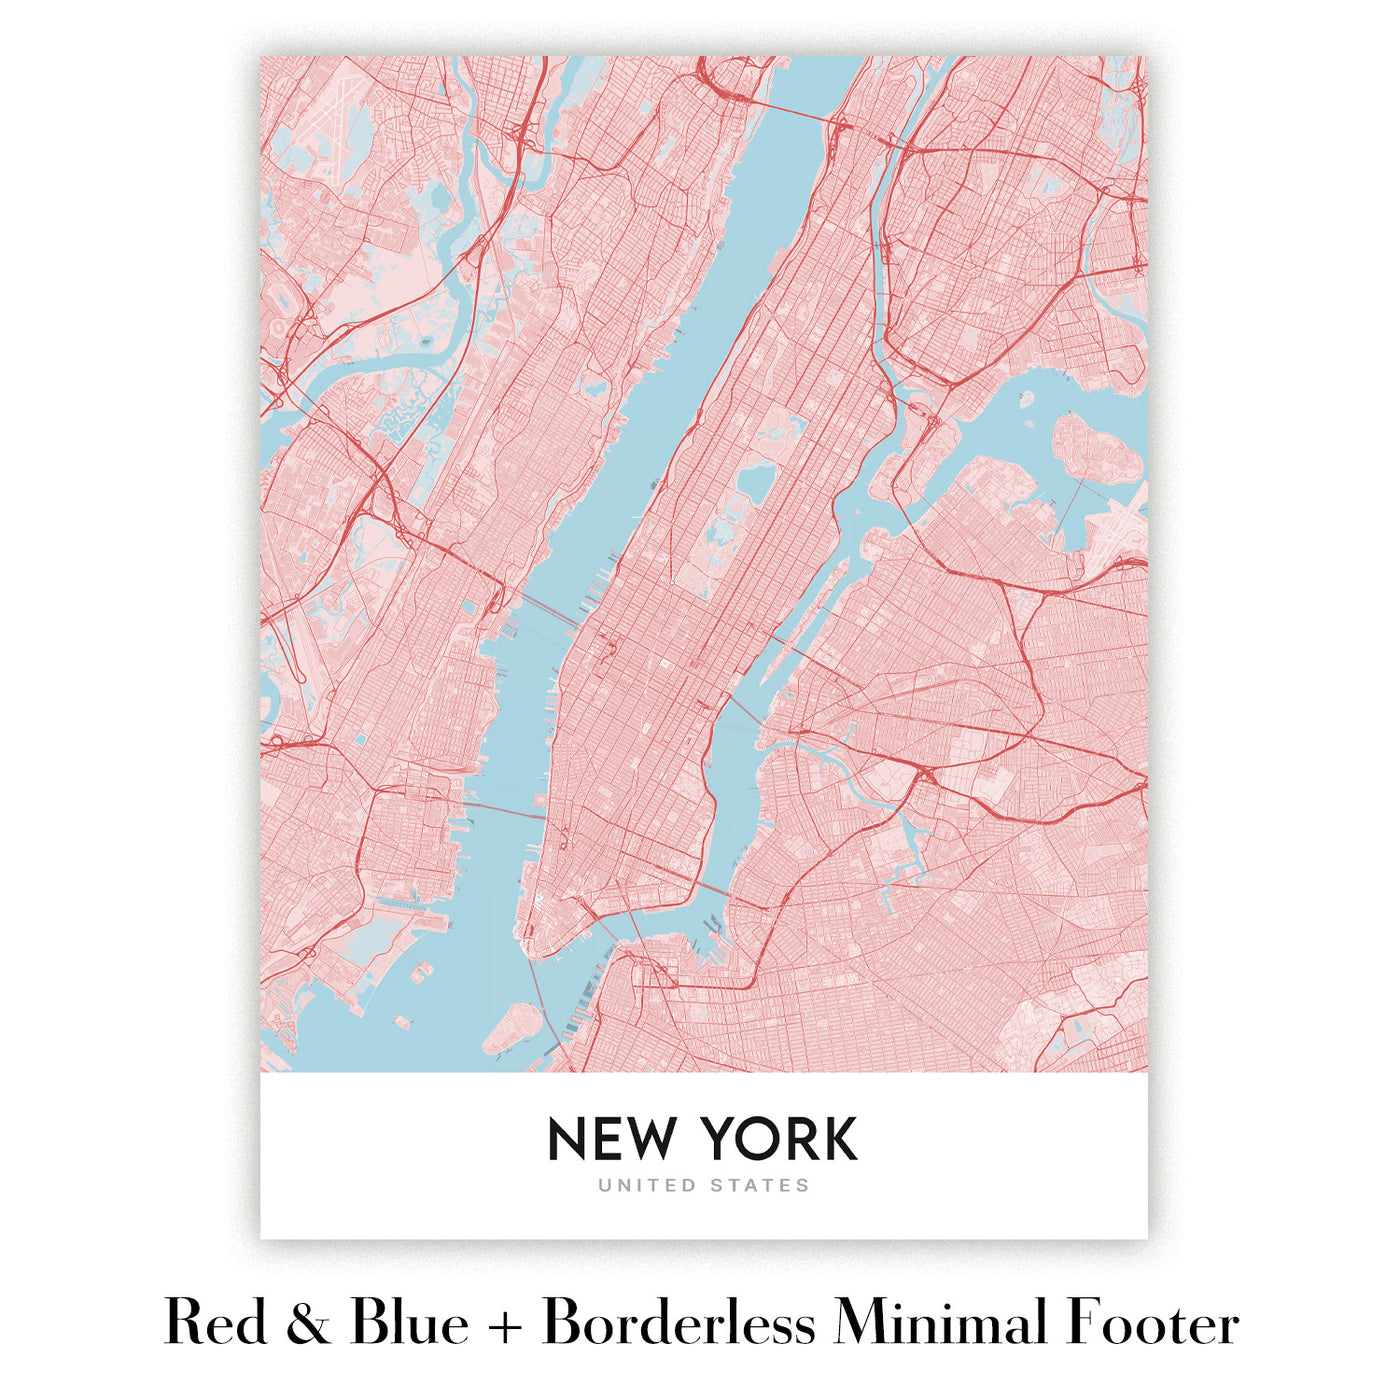 Moderner Stadtplan von New York City, NY: Central Park, Empire State Building, Freiheitsstatue, Times Square, Brooklyn Bridge